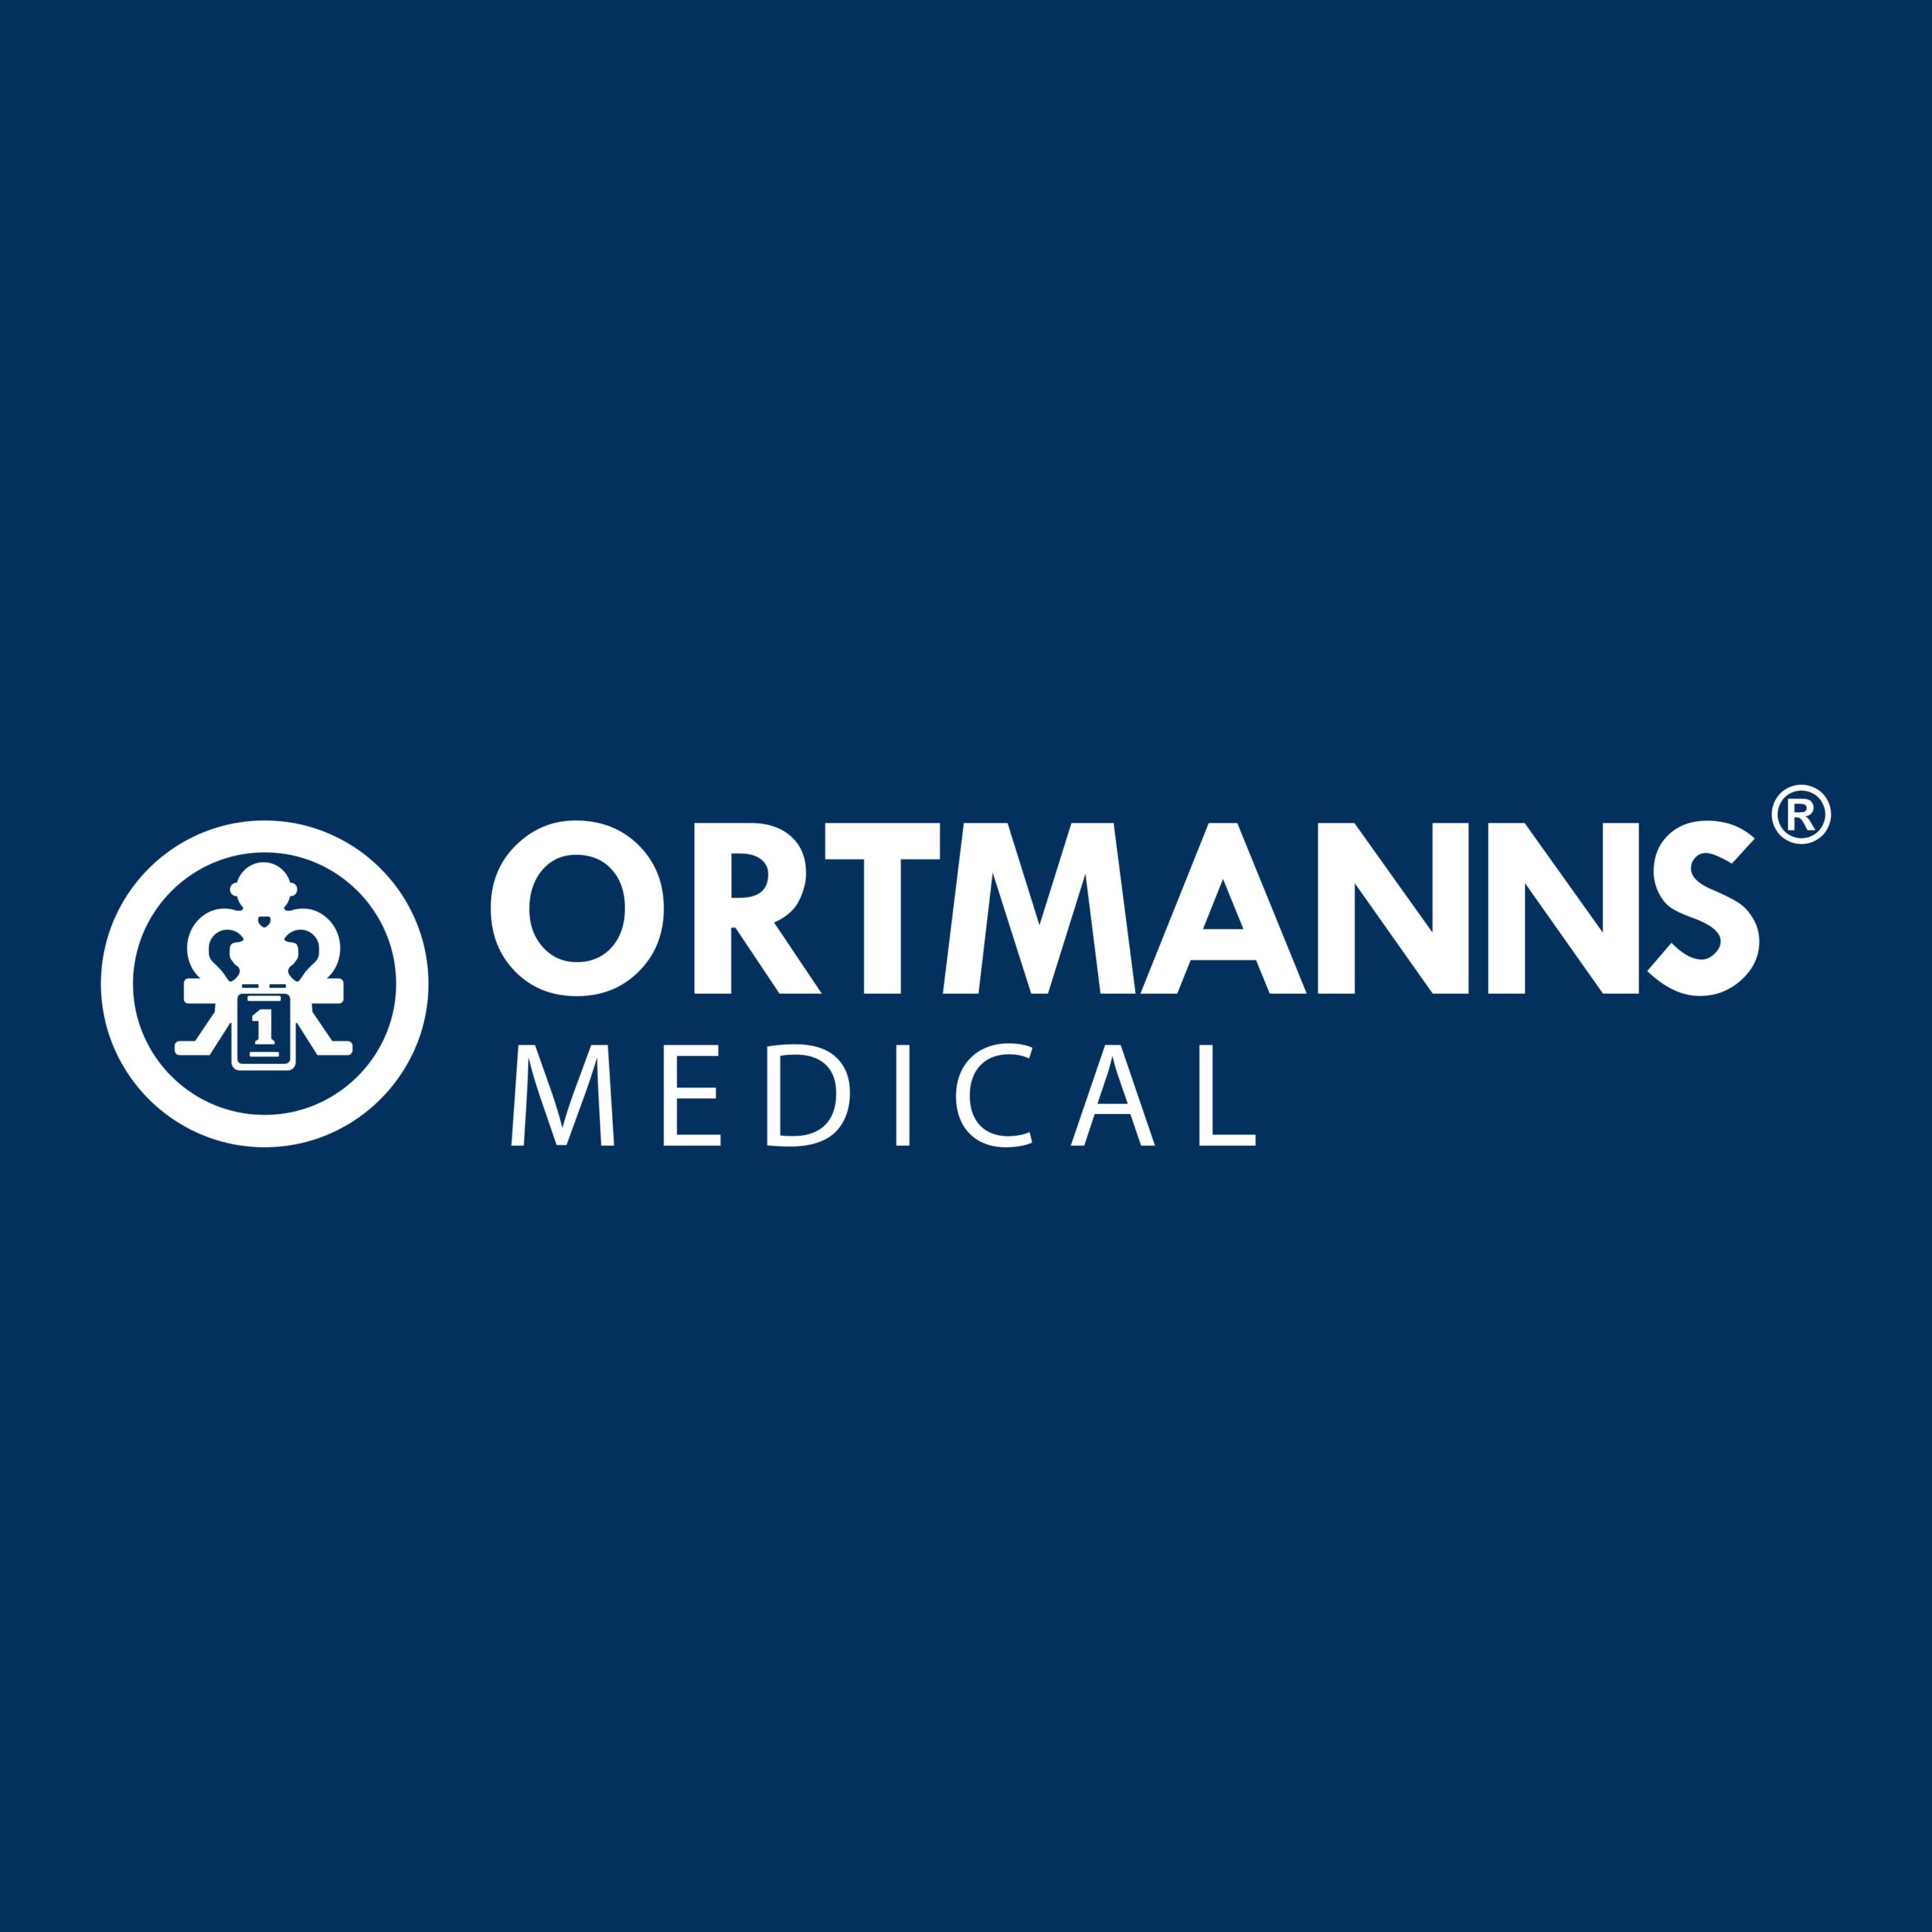 Ortmanns Medical GmbH